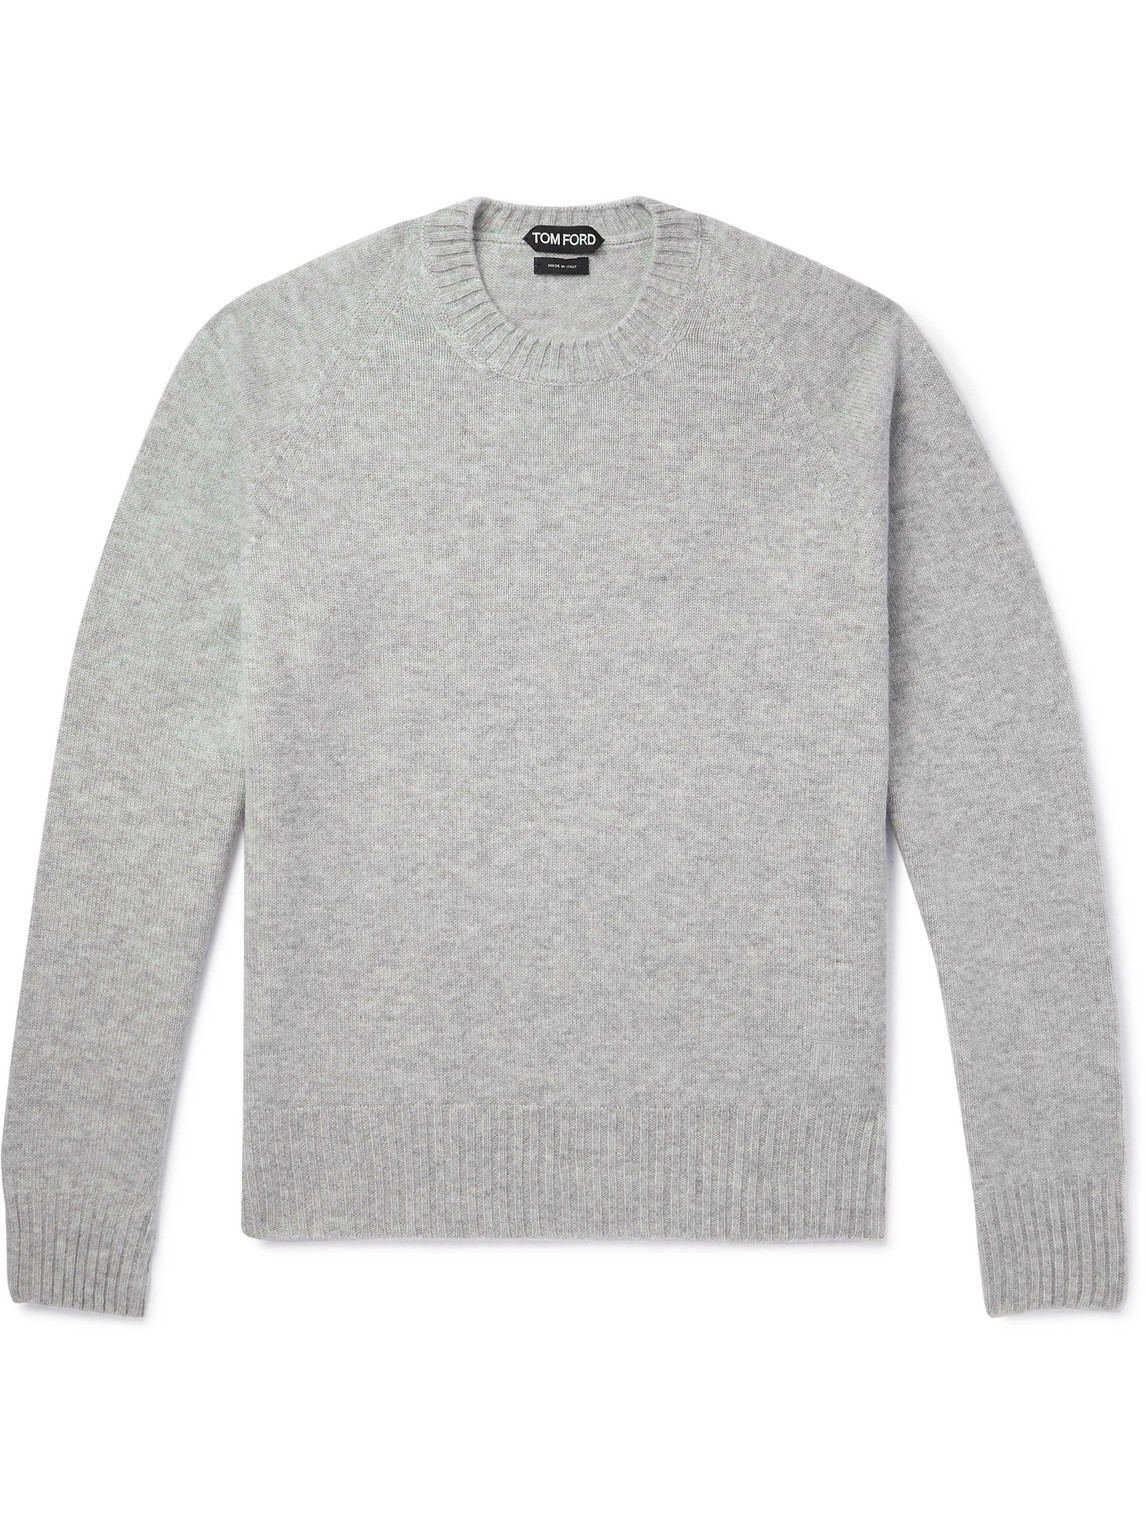 TOM FORD - Cashmere Sweater - Men - Gray - IT 48 von TOM FORD